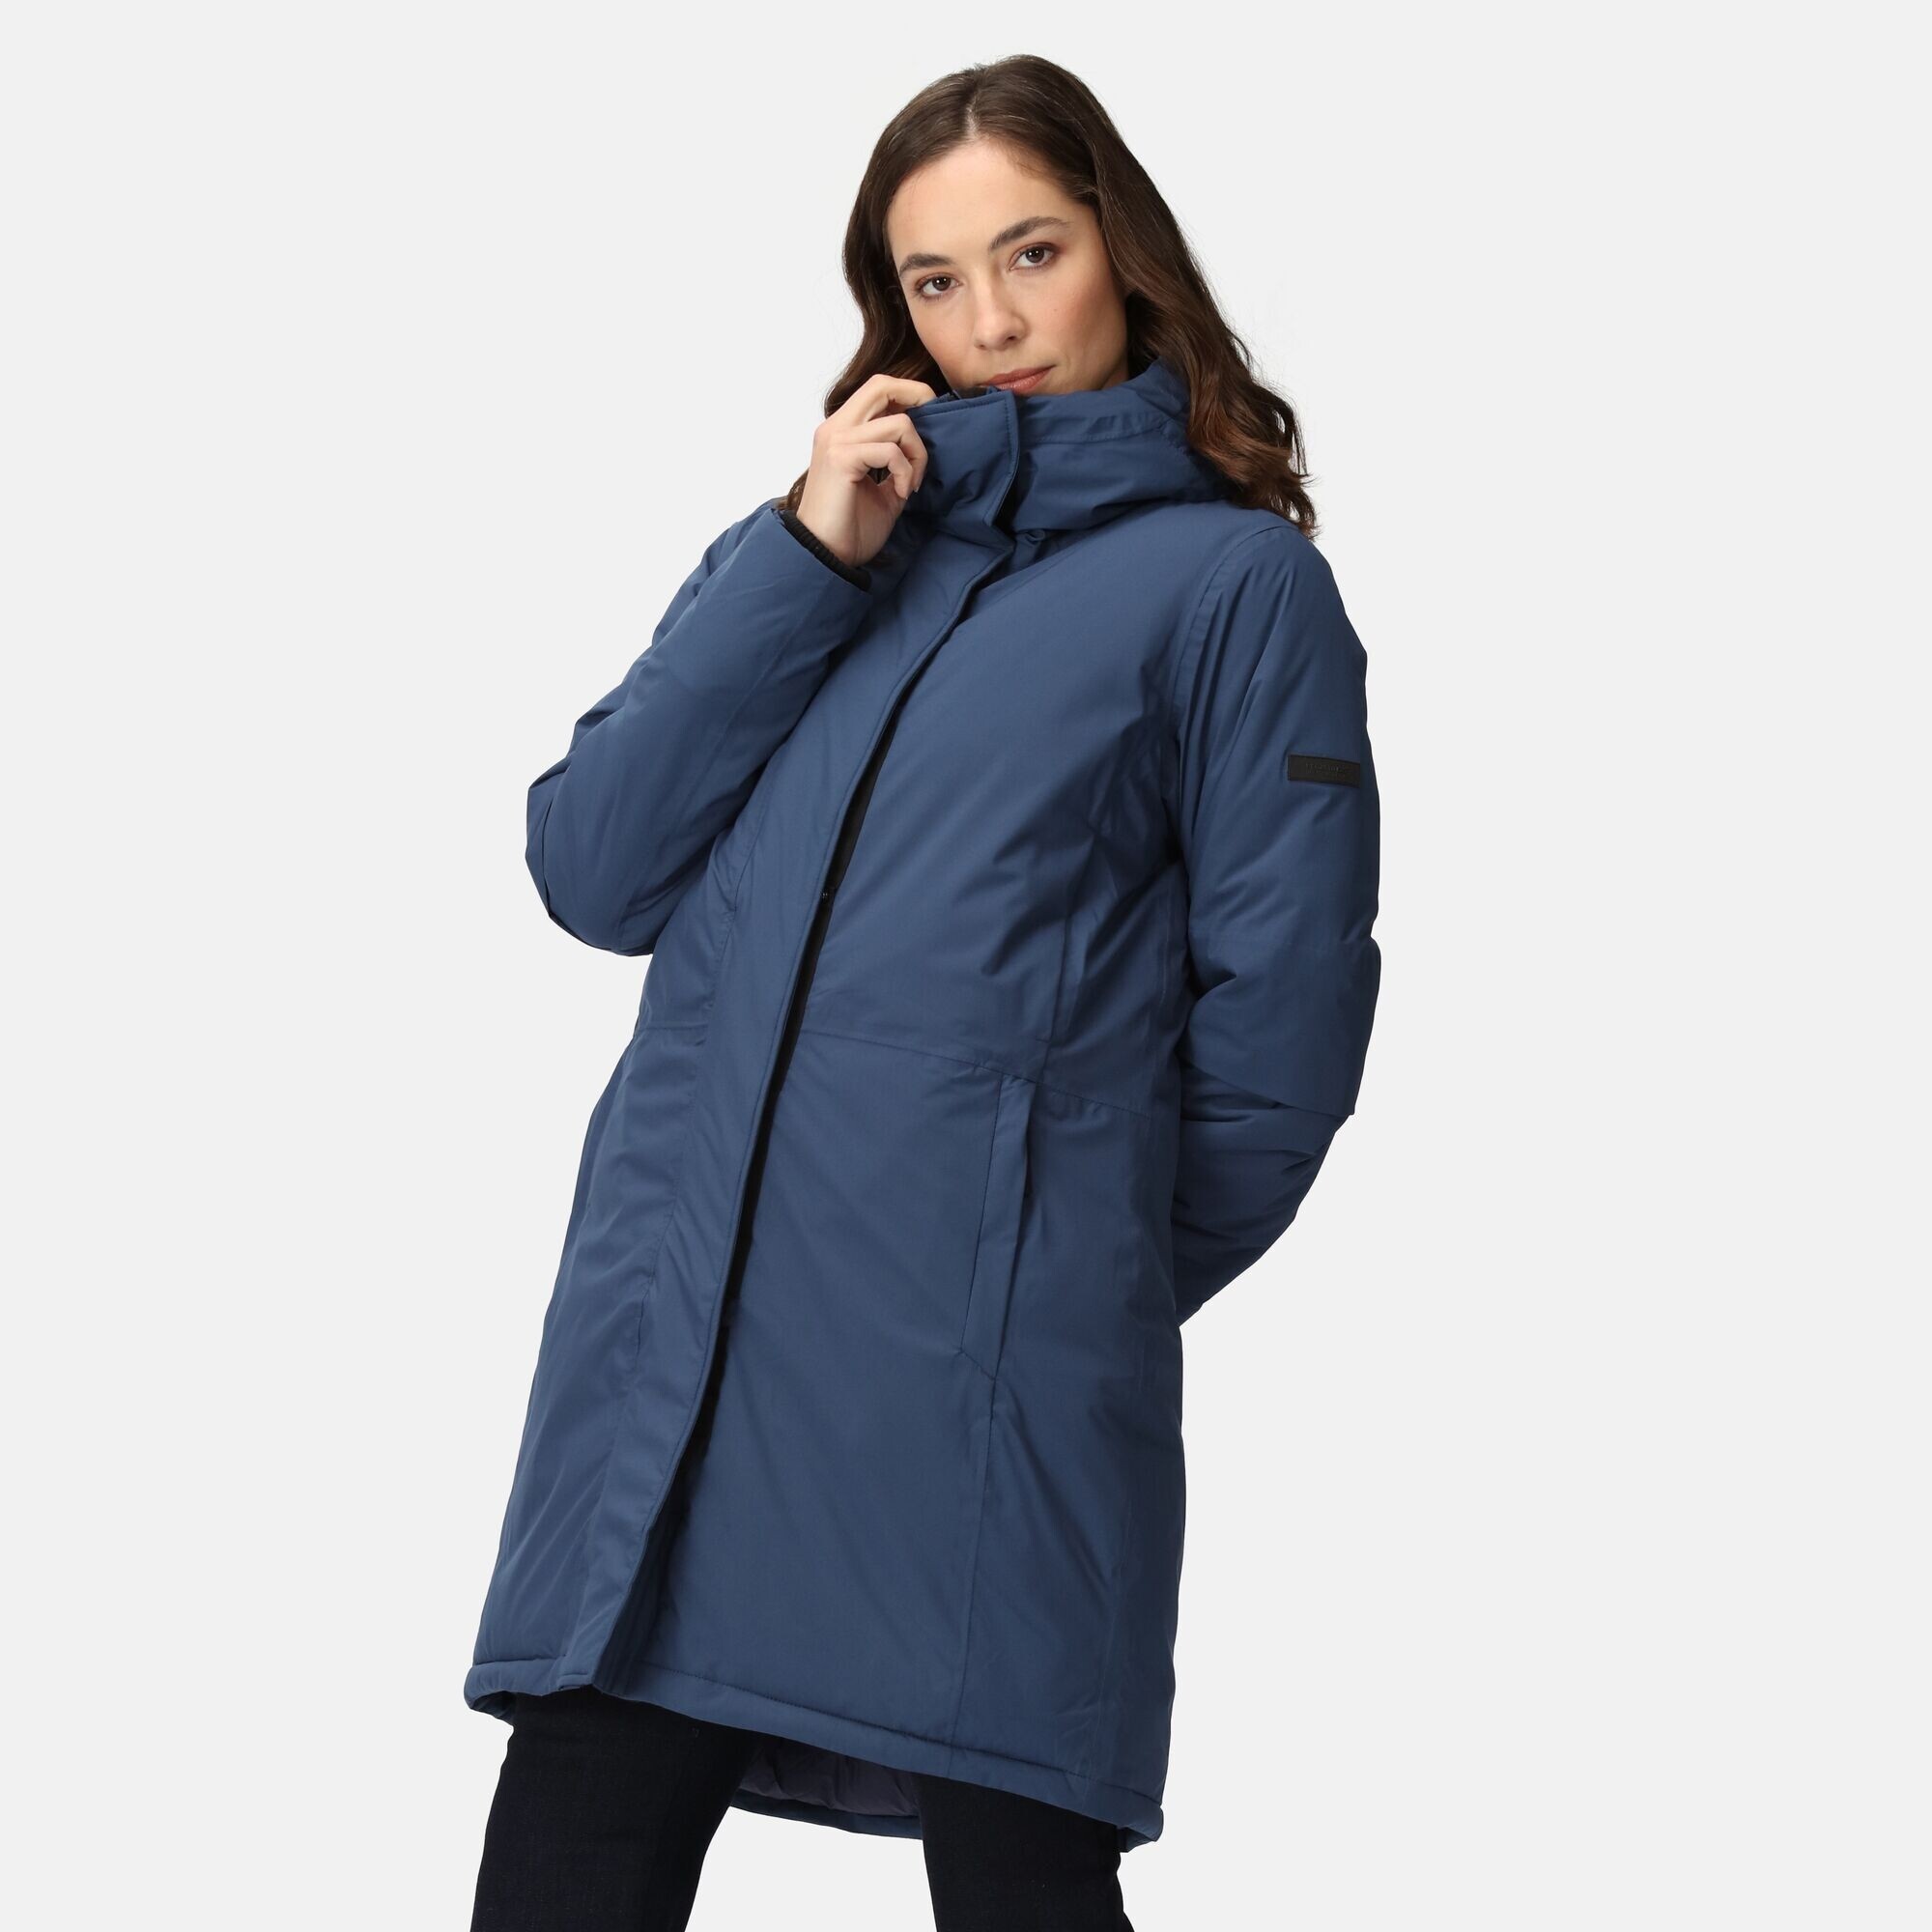 Dámský zimní kabát Yewbank III RWP384-VD4 modrý - Regatta 40